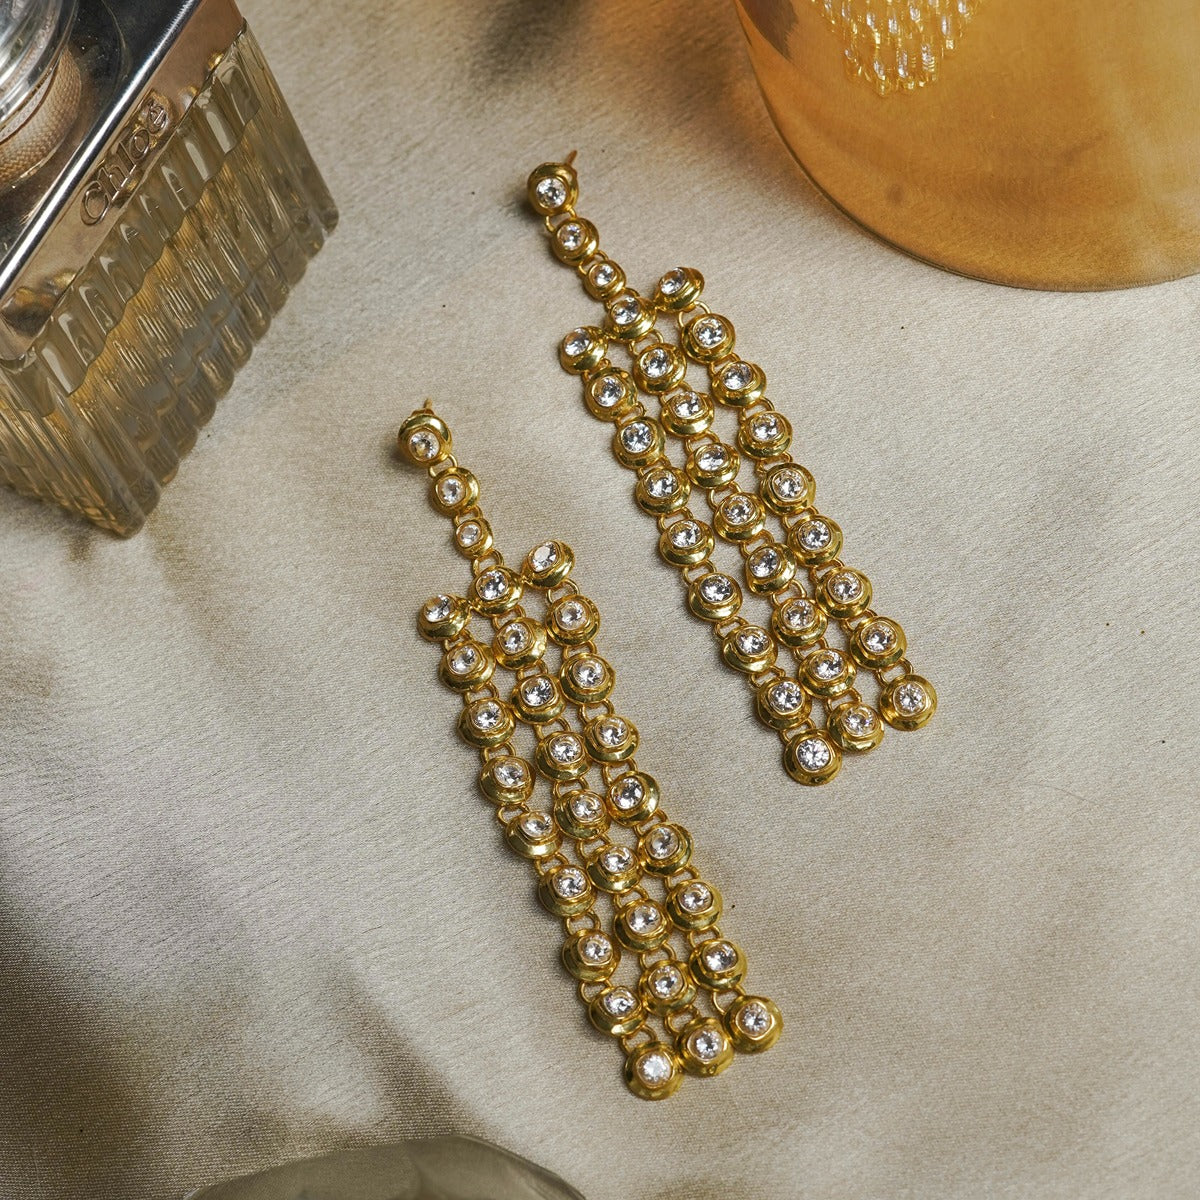 Buy Fancy Earrings for Girls, Women's Designer Earrings Online India |  Zariin